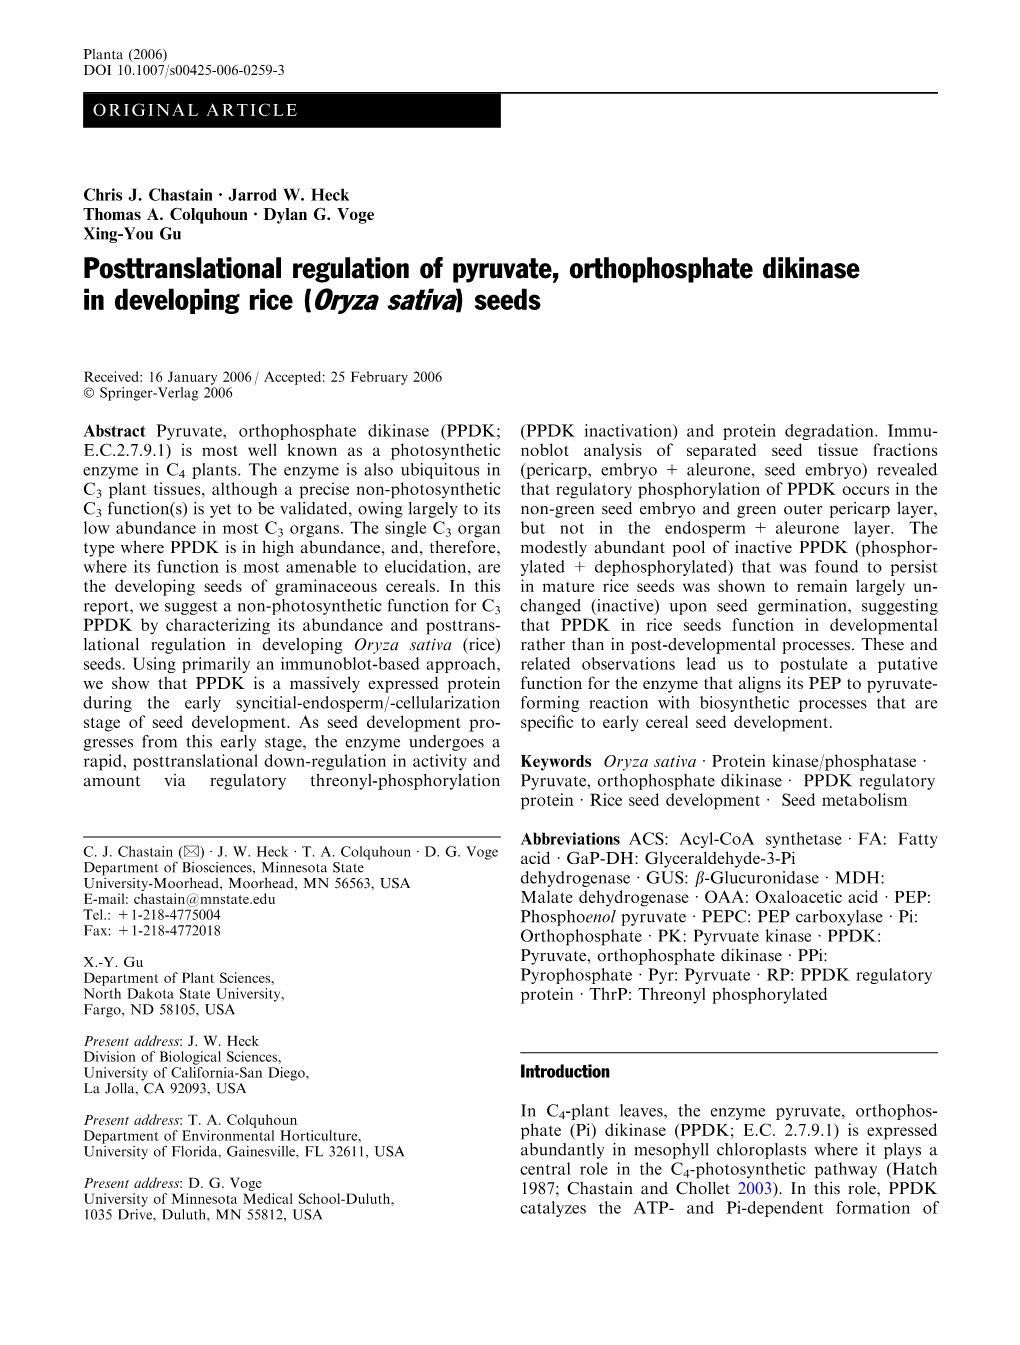 Posttranslational Regulation of Pyruvate, Orthophosphate Dikinase in Developing Rice (Oryza Sativa) Seeds